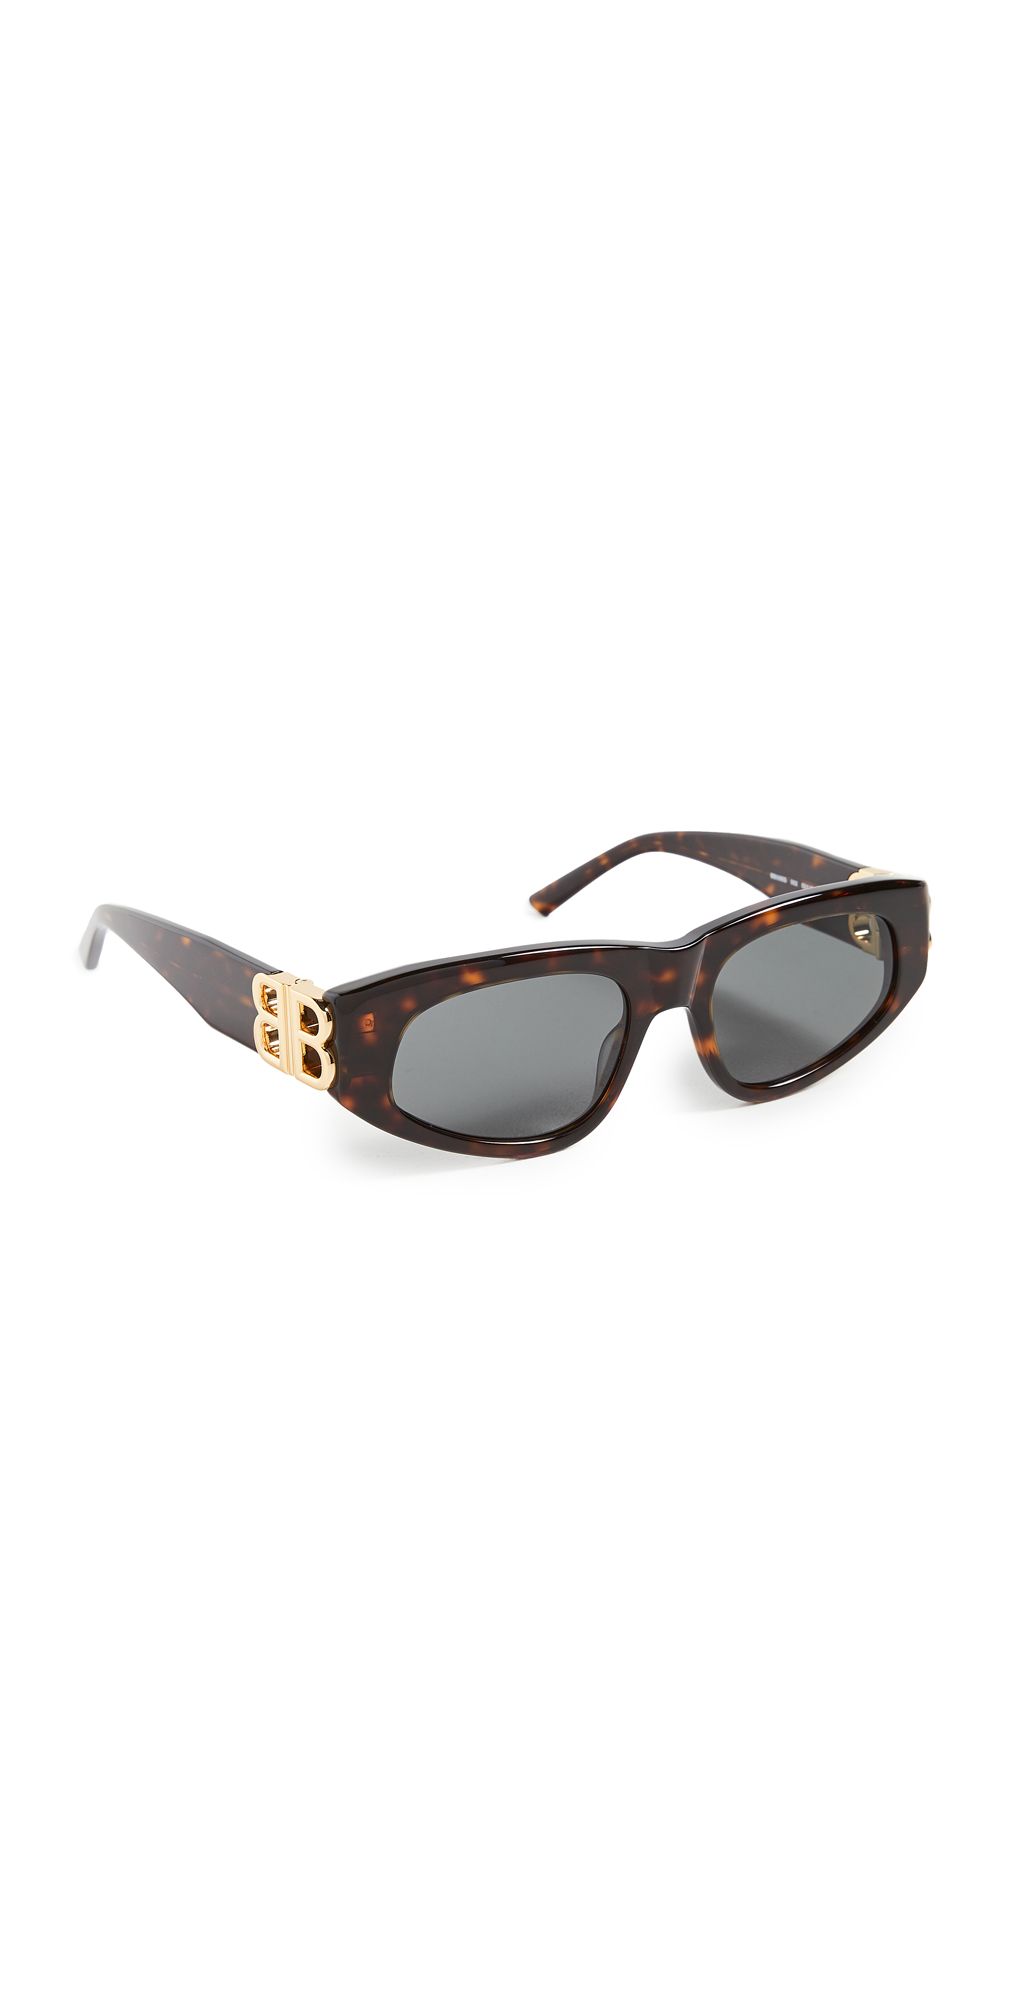 Dynasty Vintage Inspired Oval Sunglasses | Shopbop